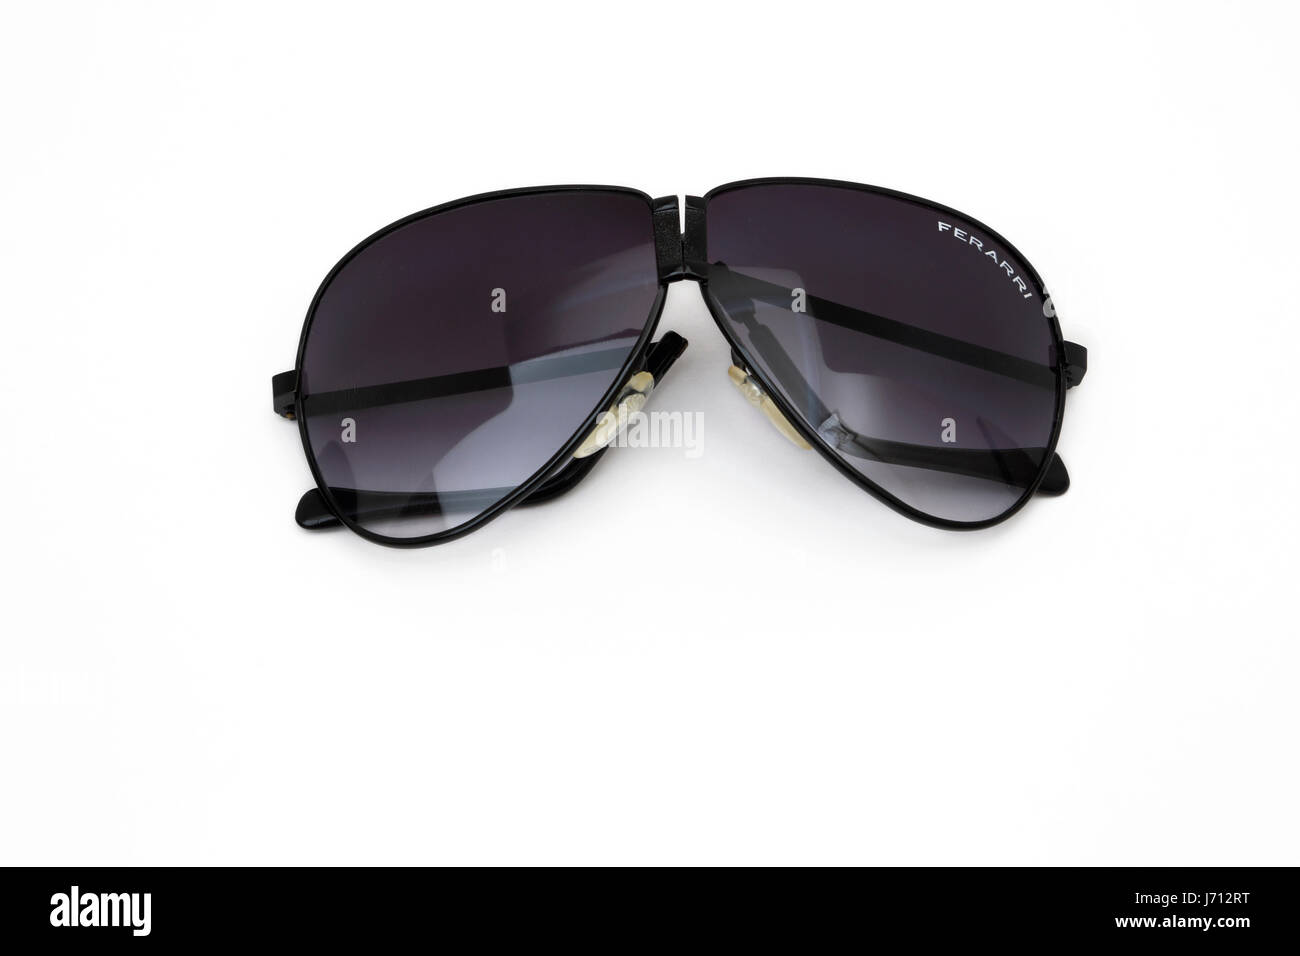 Ferrari Fold up Sunglasses Stock Photo - Alamy